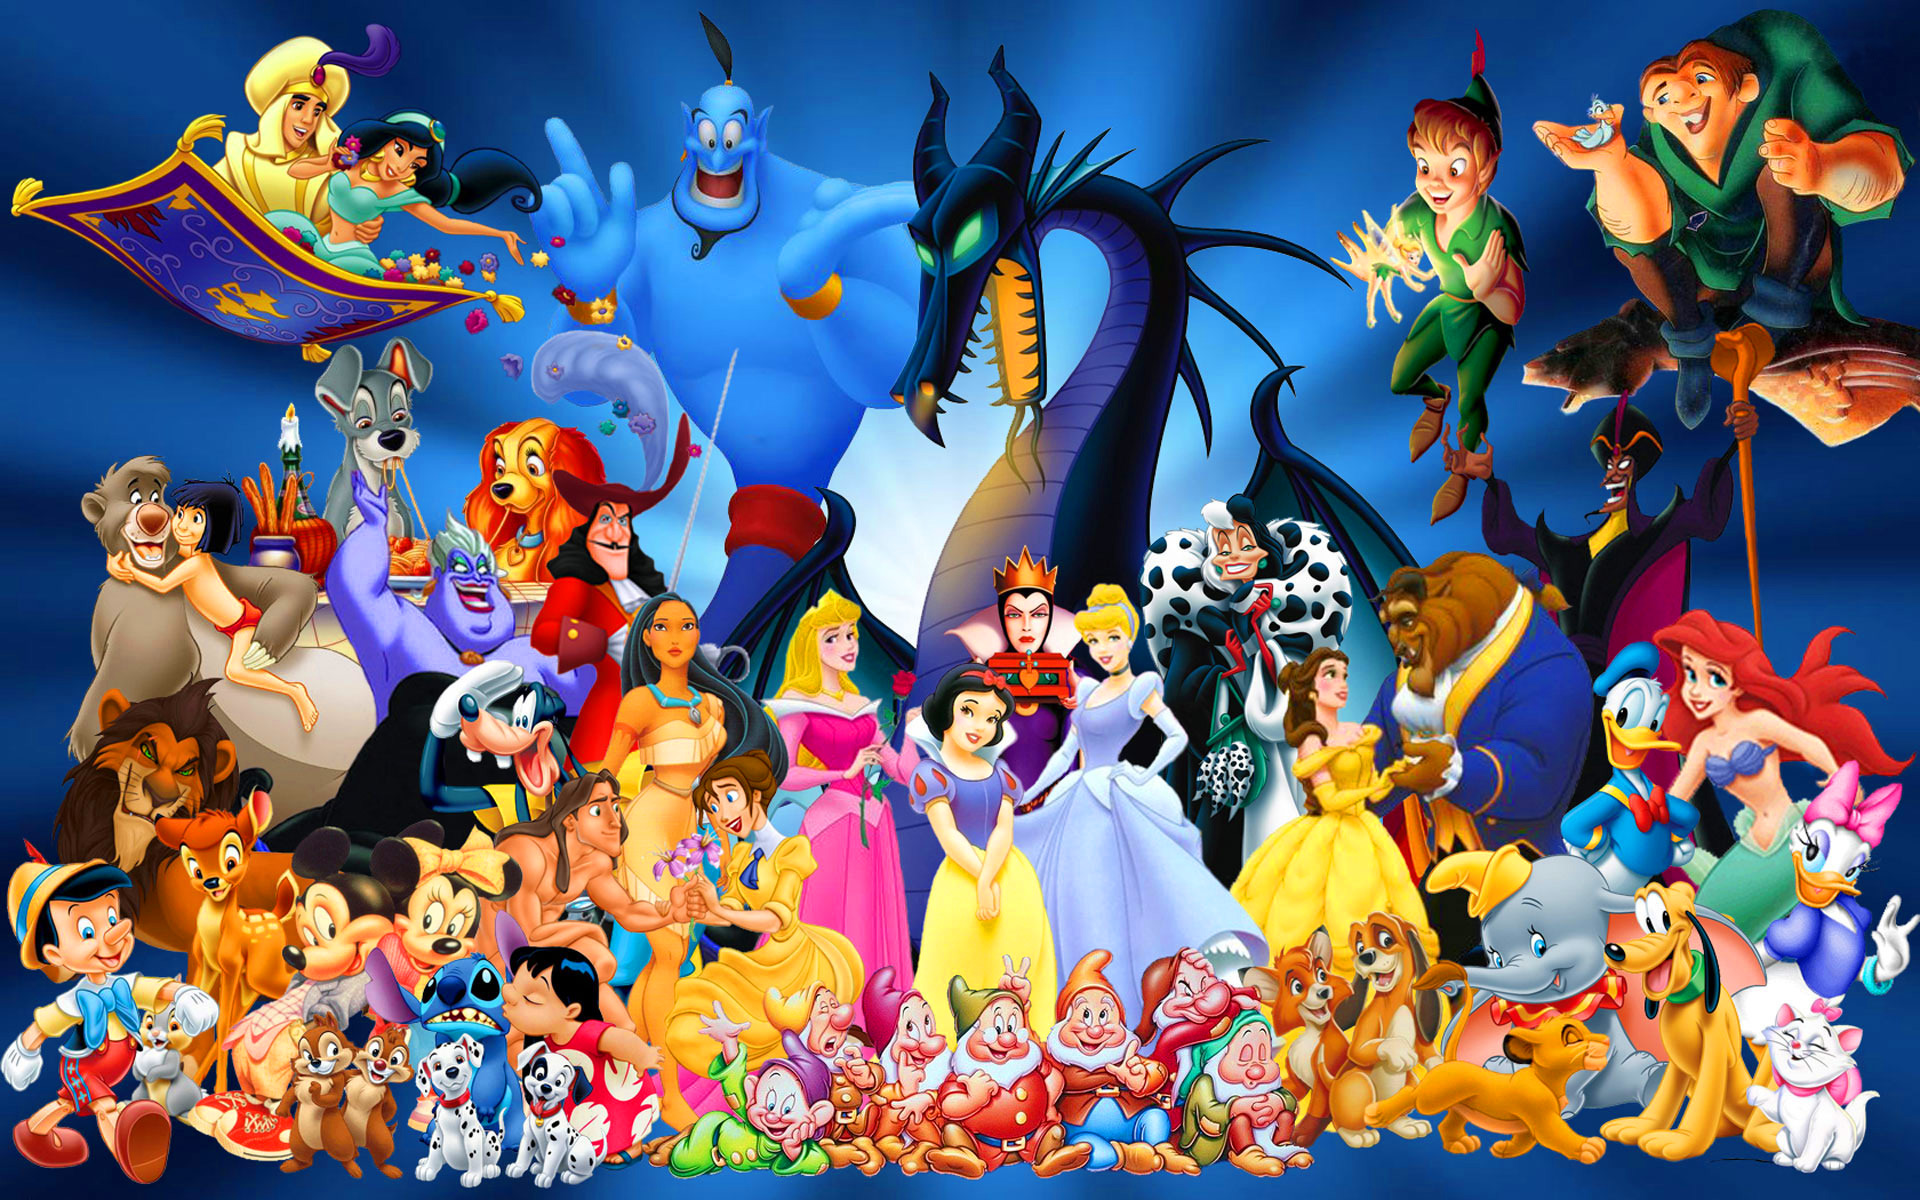 Free desktop wallpaper of Disney Cartoon Characters